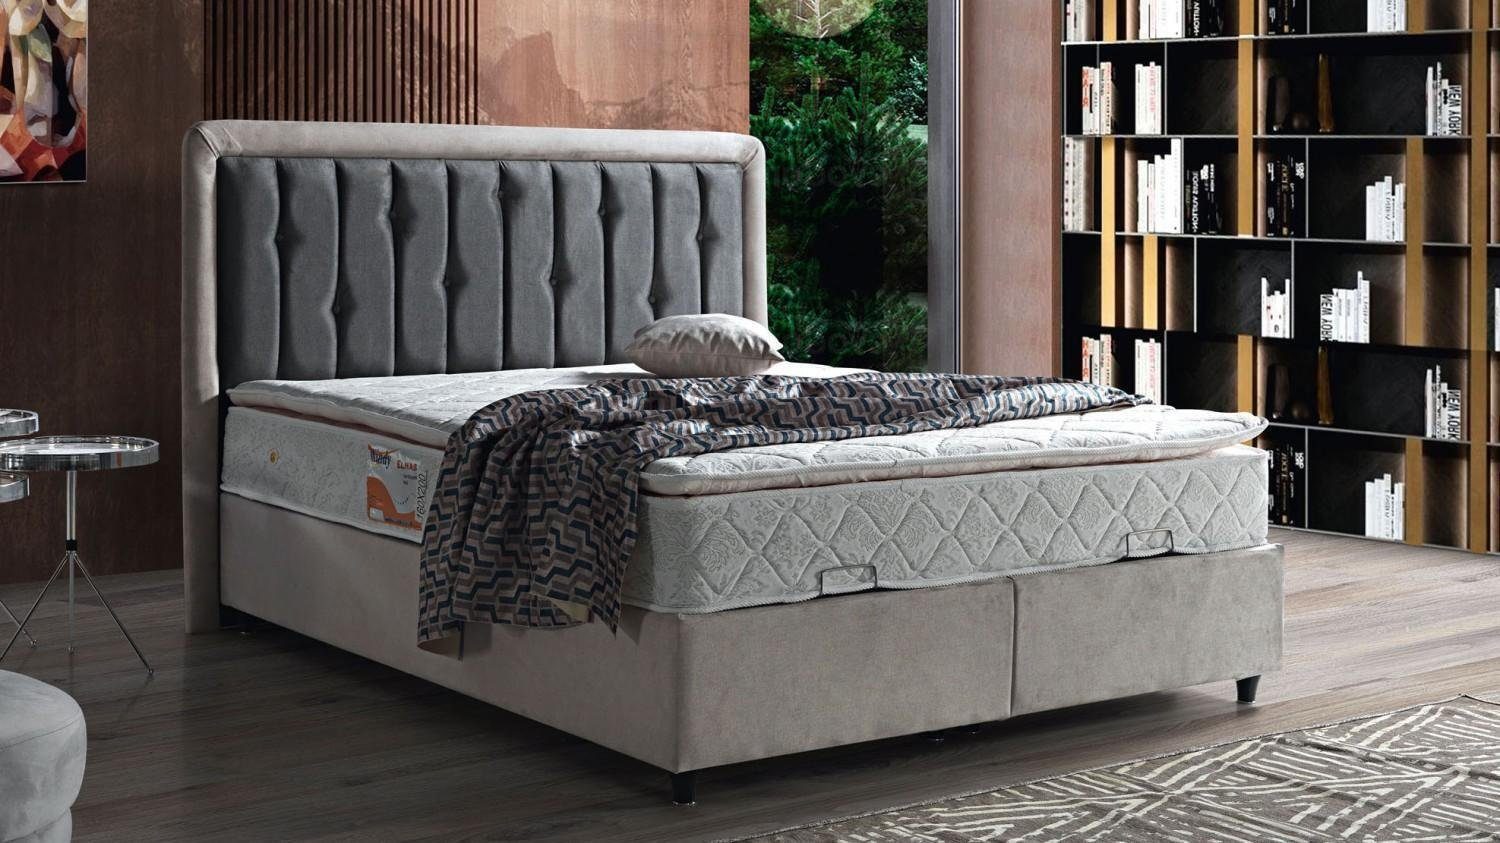 JVmoebel Bett Bett Design Doppelbett Luxus Betten Polster Schlafzimmer Möbel 180x200 (Bett), Made In Europe